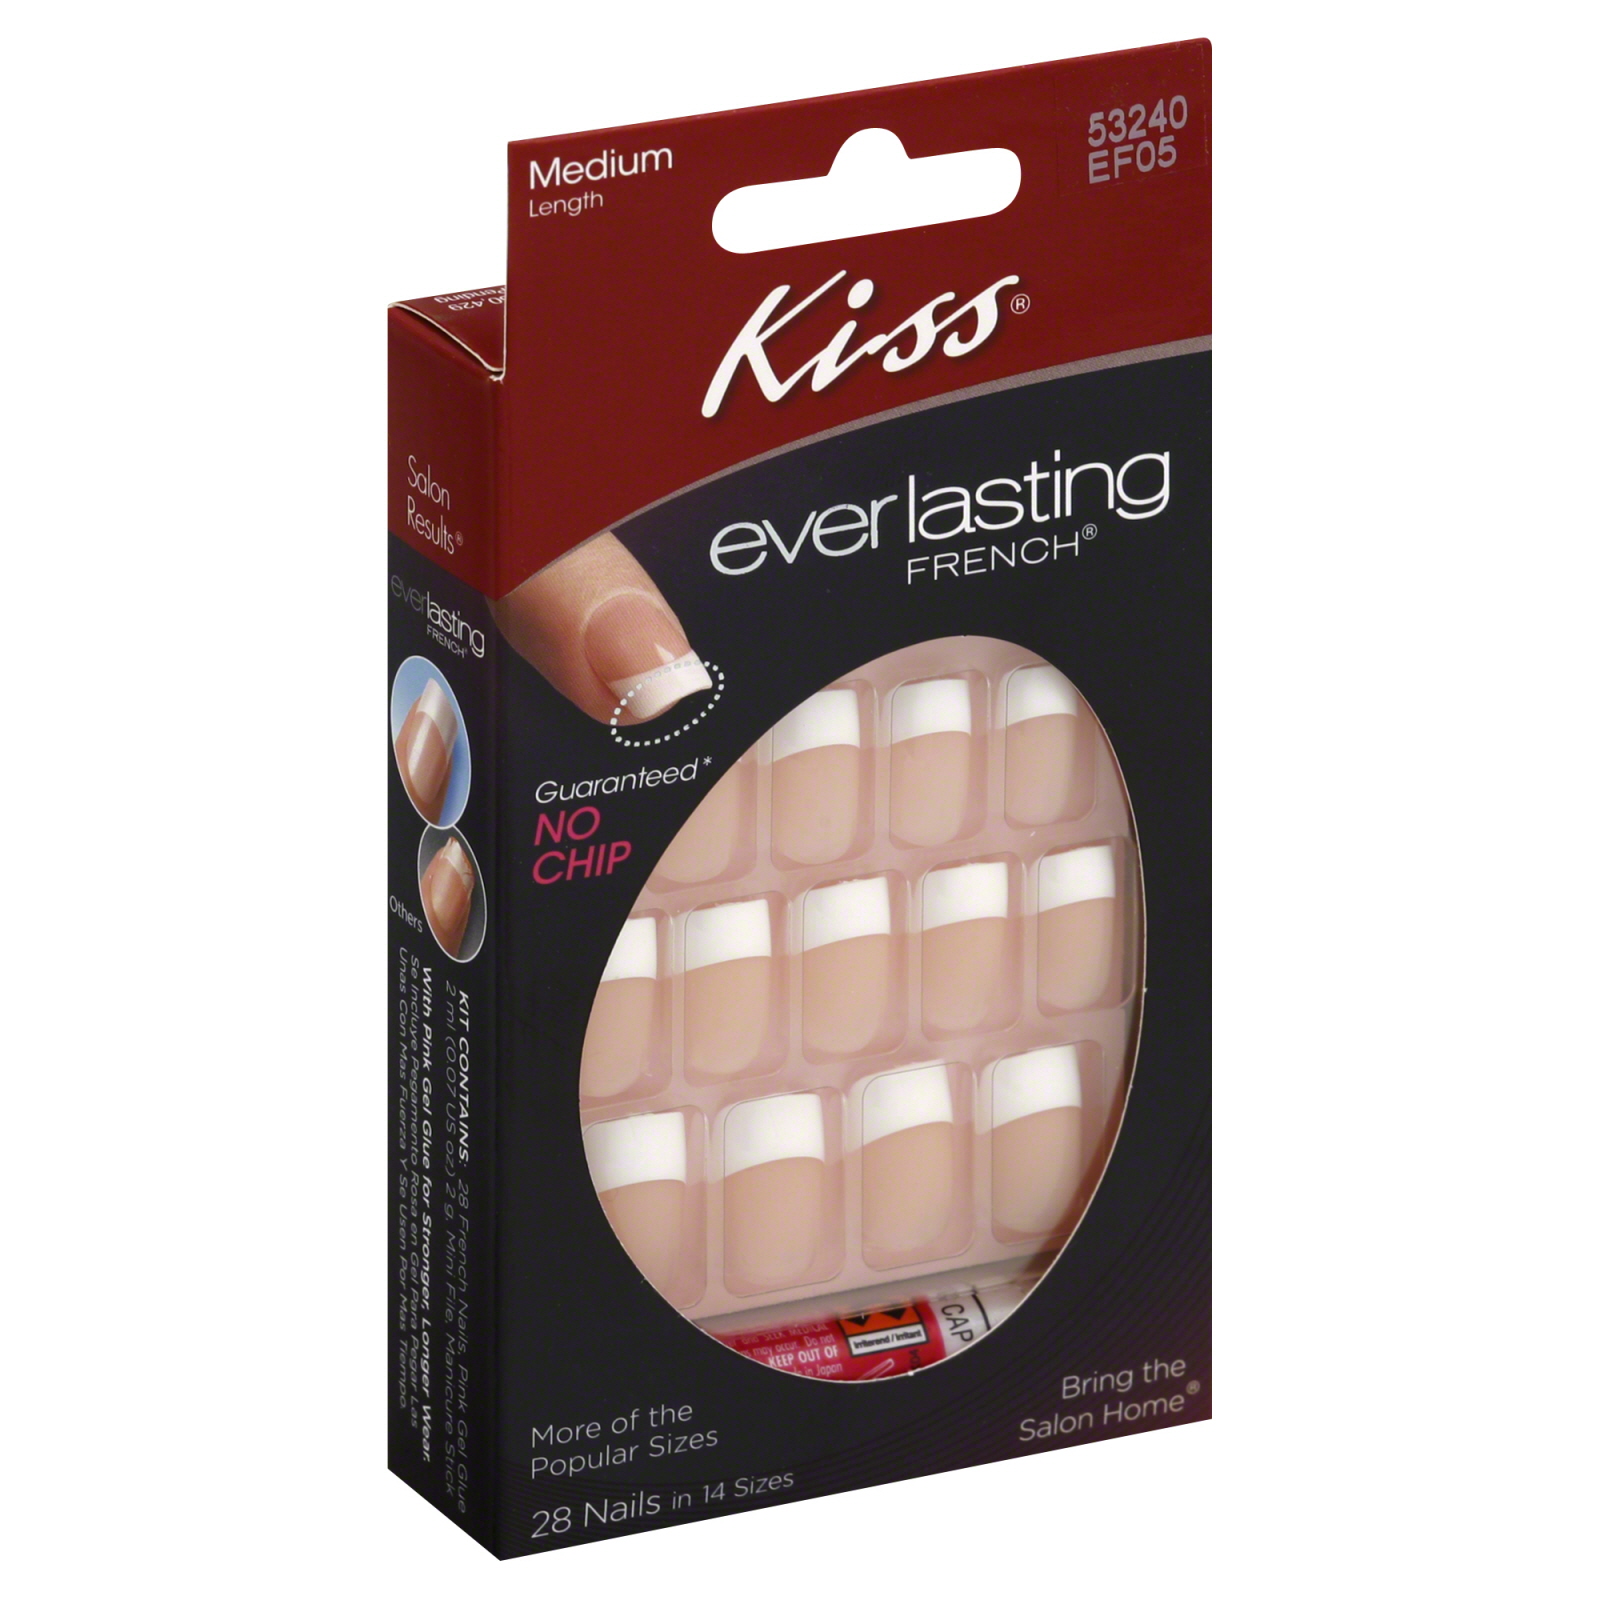 Kiss Everlasting French Nail Kit, Medium Length, Infinite EF05, 1 kit